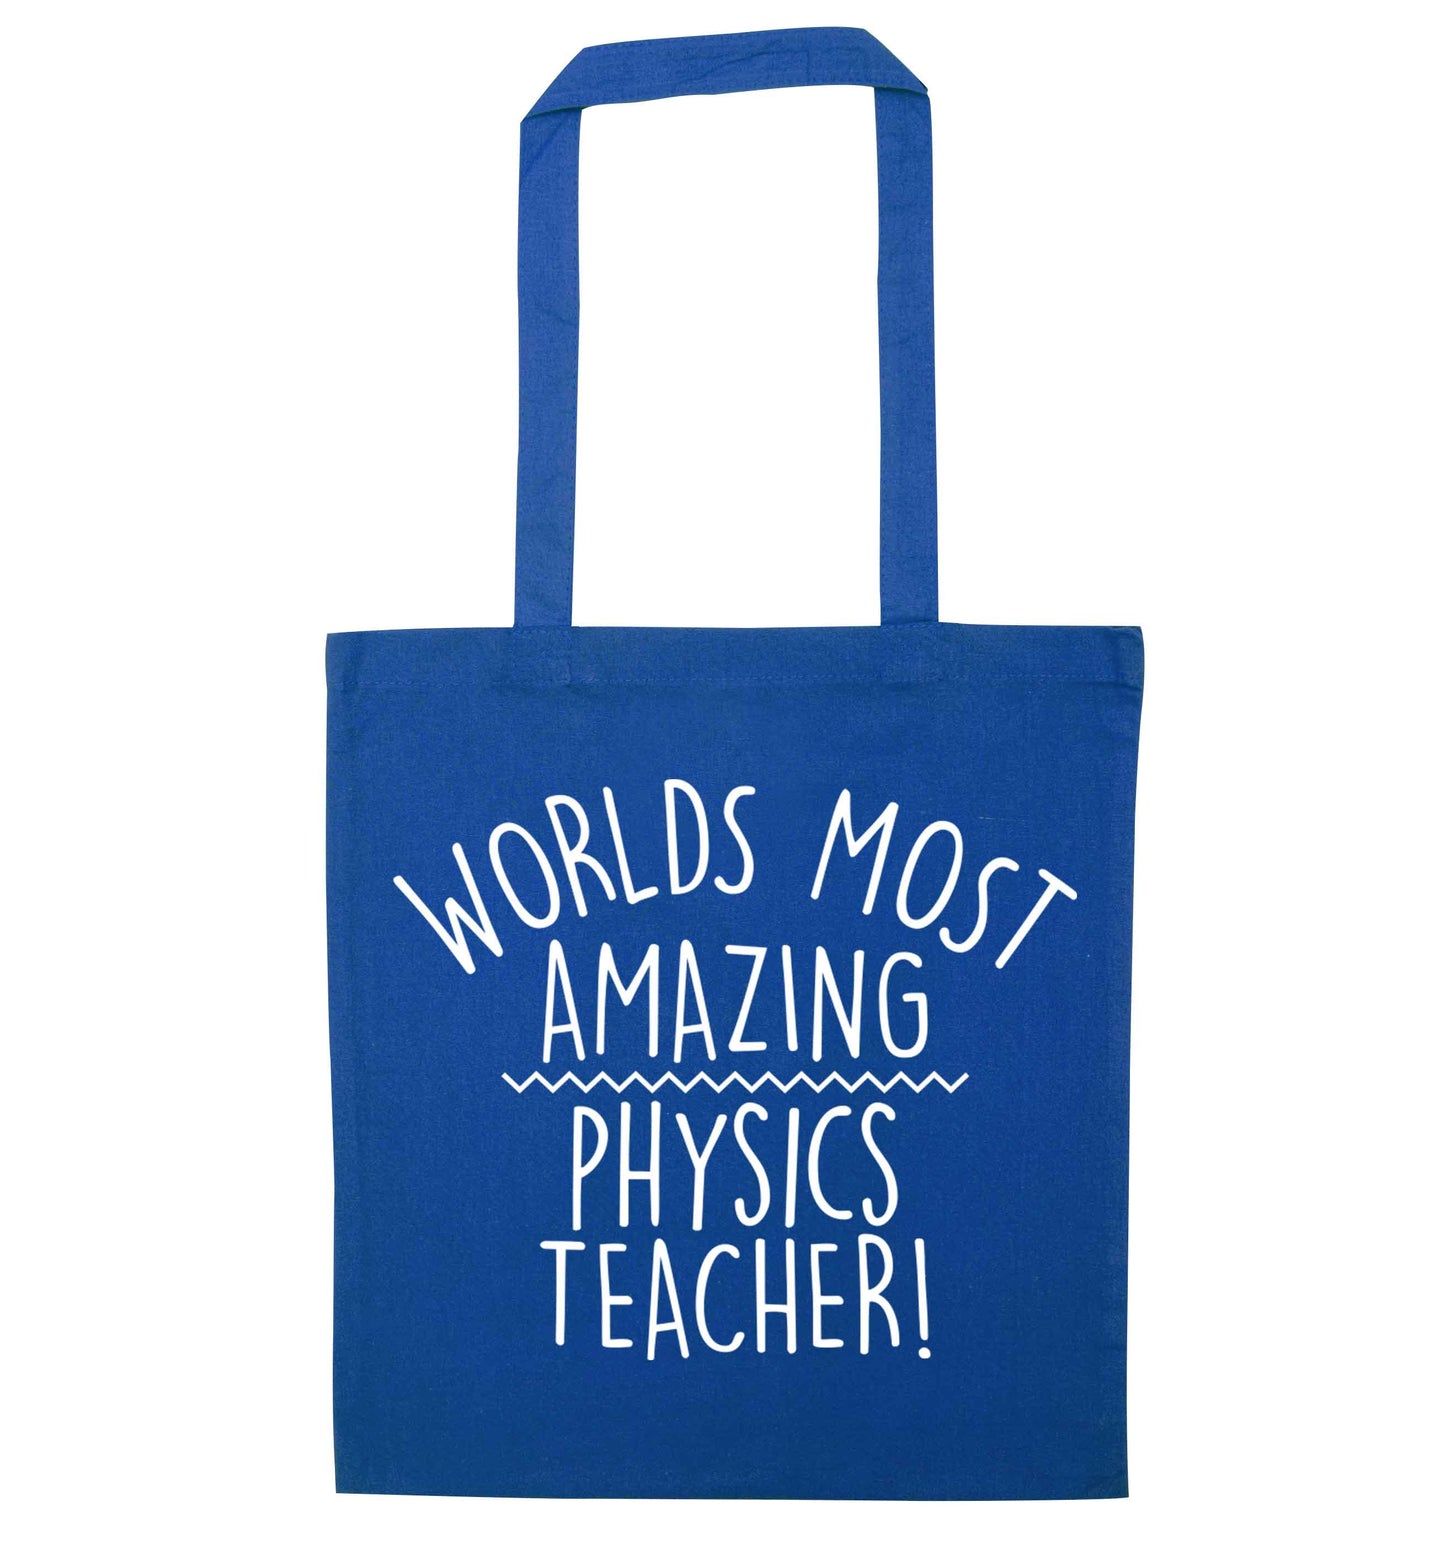 Worlds most amazing physics teacher blue tote bag